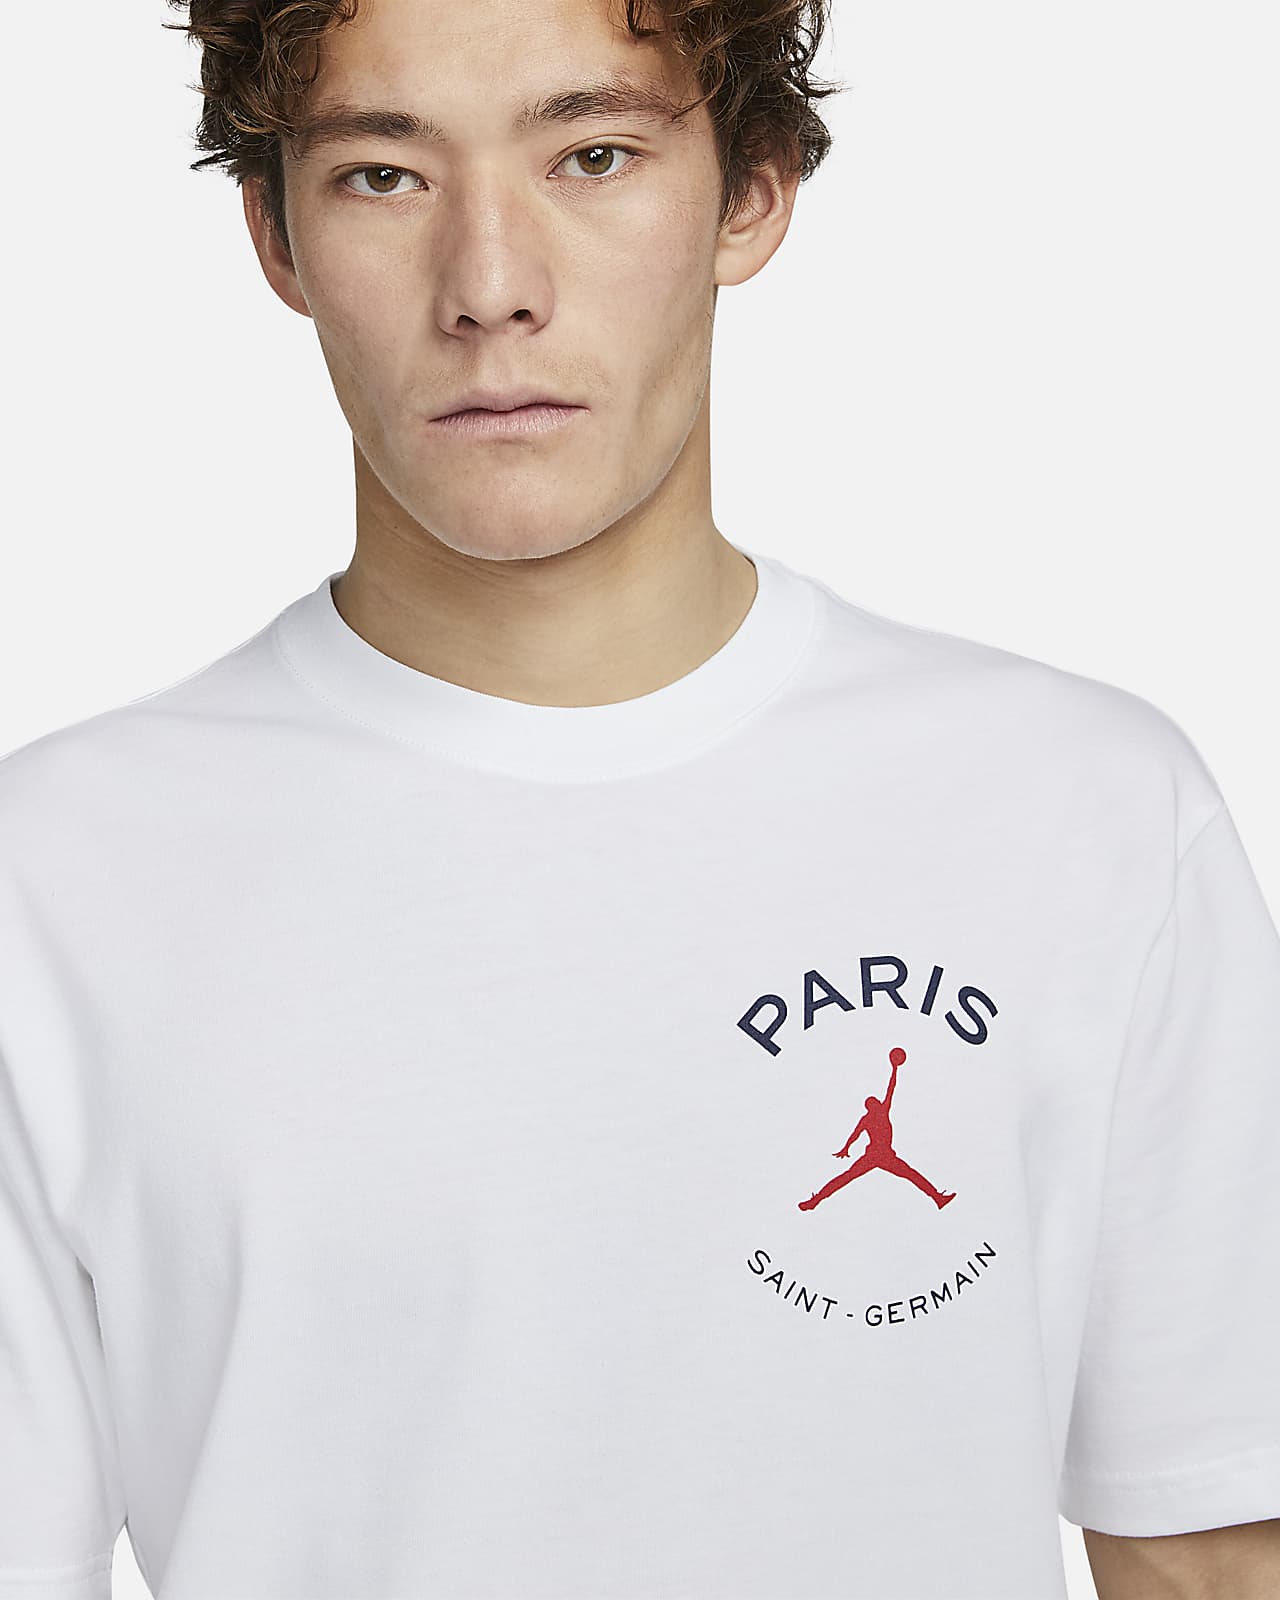 Nike公式 ジョーダン X パリ サンジェルマン メンズ ロゴ Tシャツ オンラインストア 通販サイト